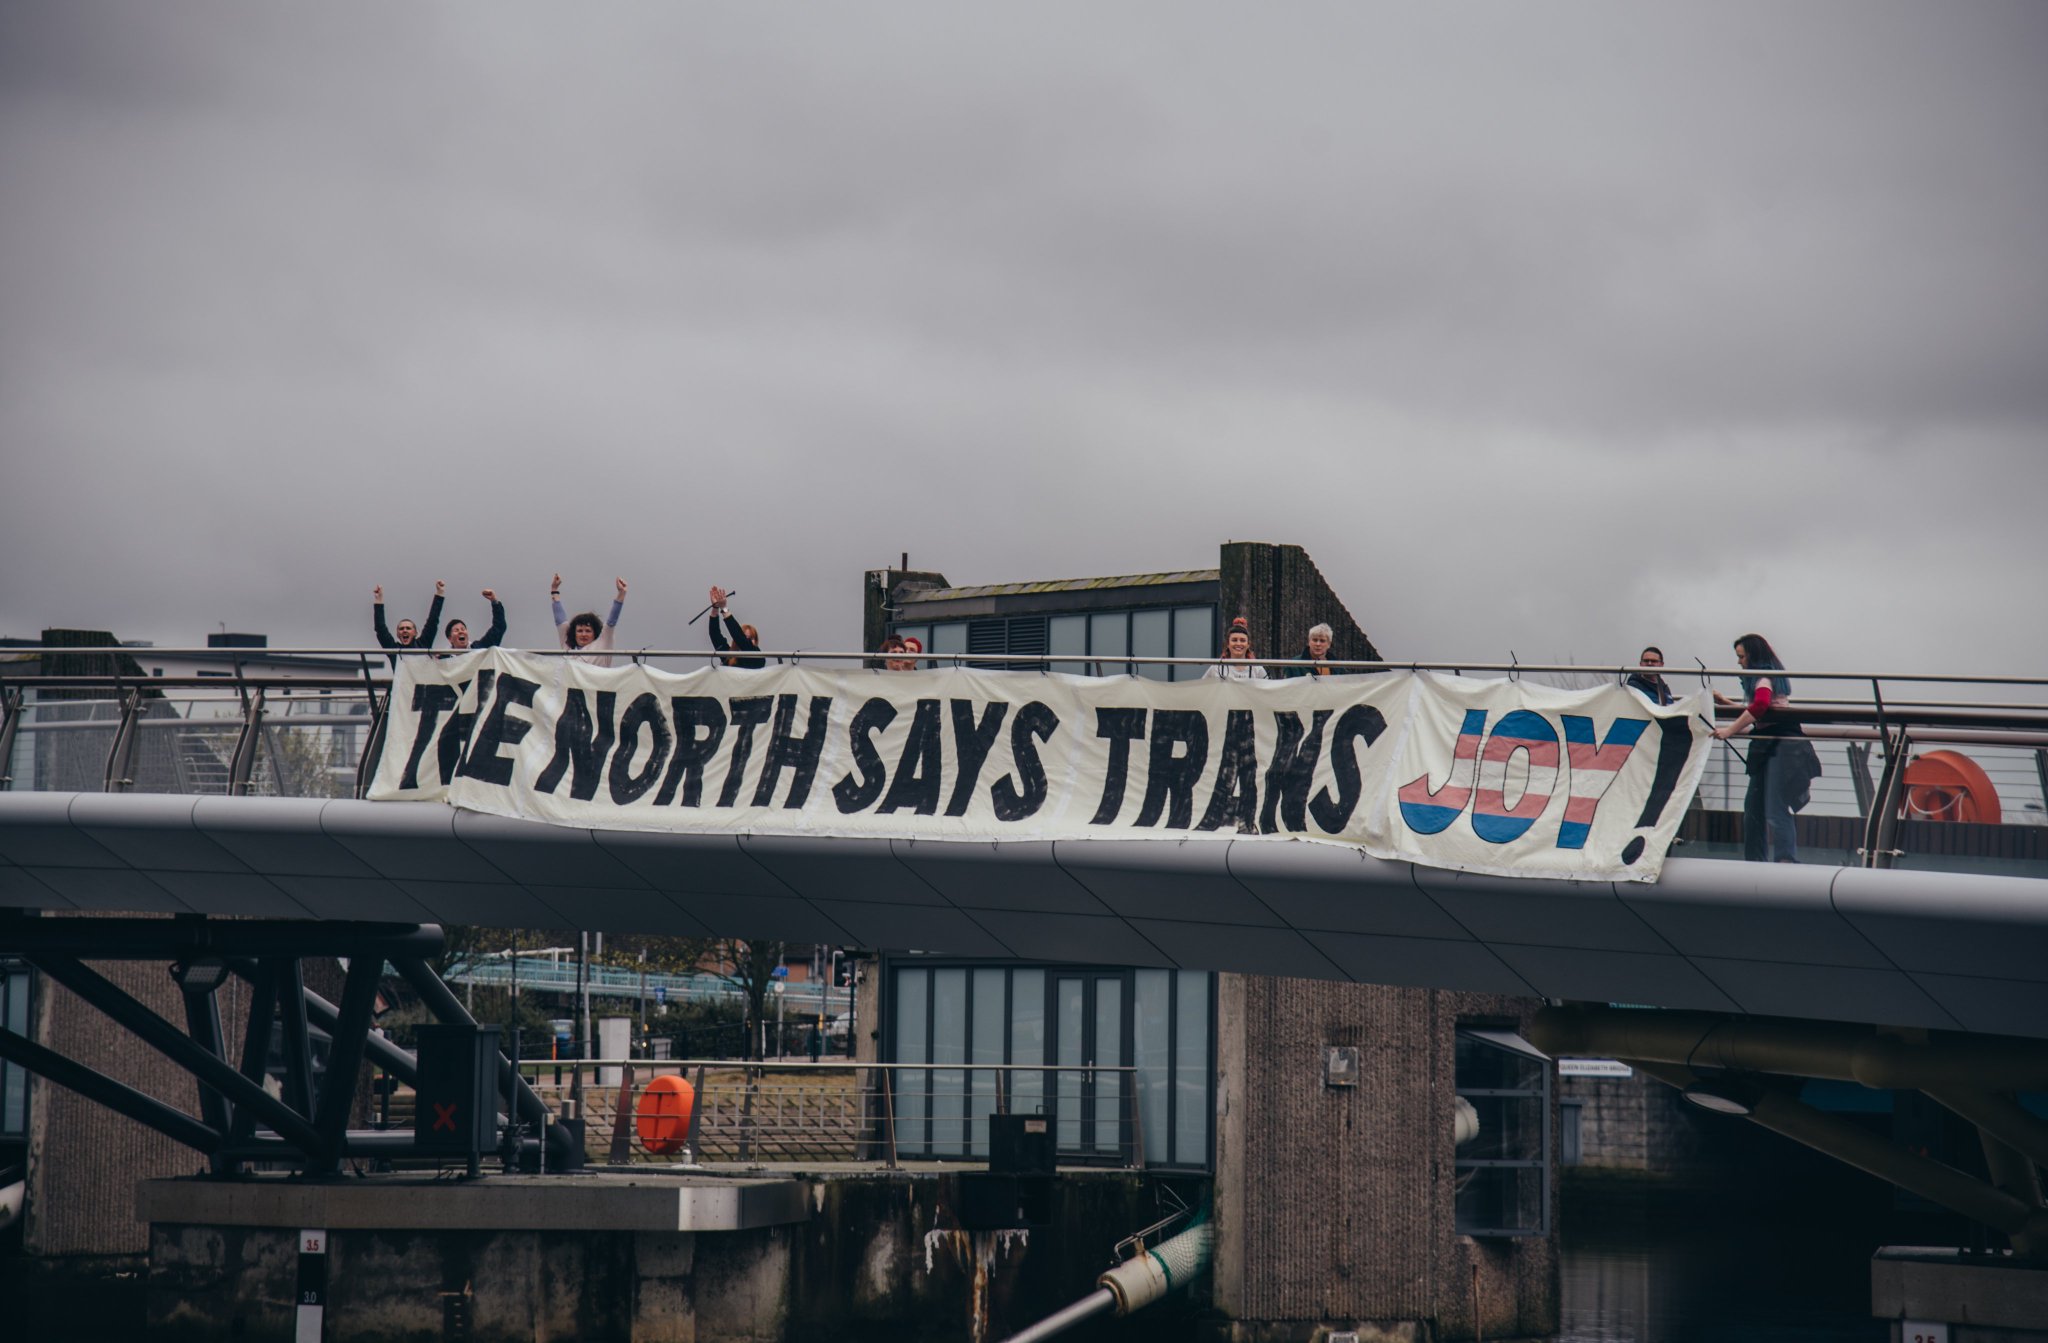 The North Says Trans Joy banner hanging behind KJK's Belfast rally, photo credit Brendan J Harkin @brendanjharkin